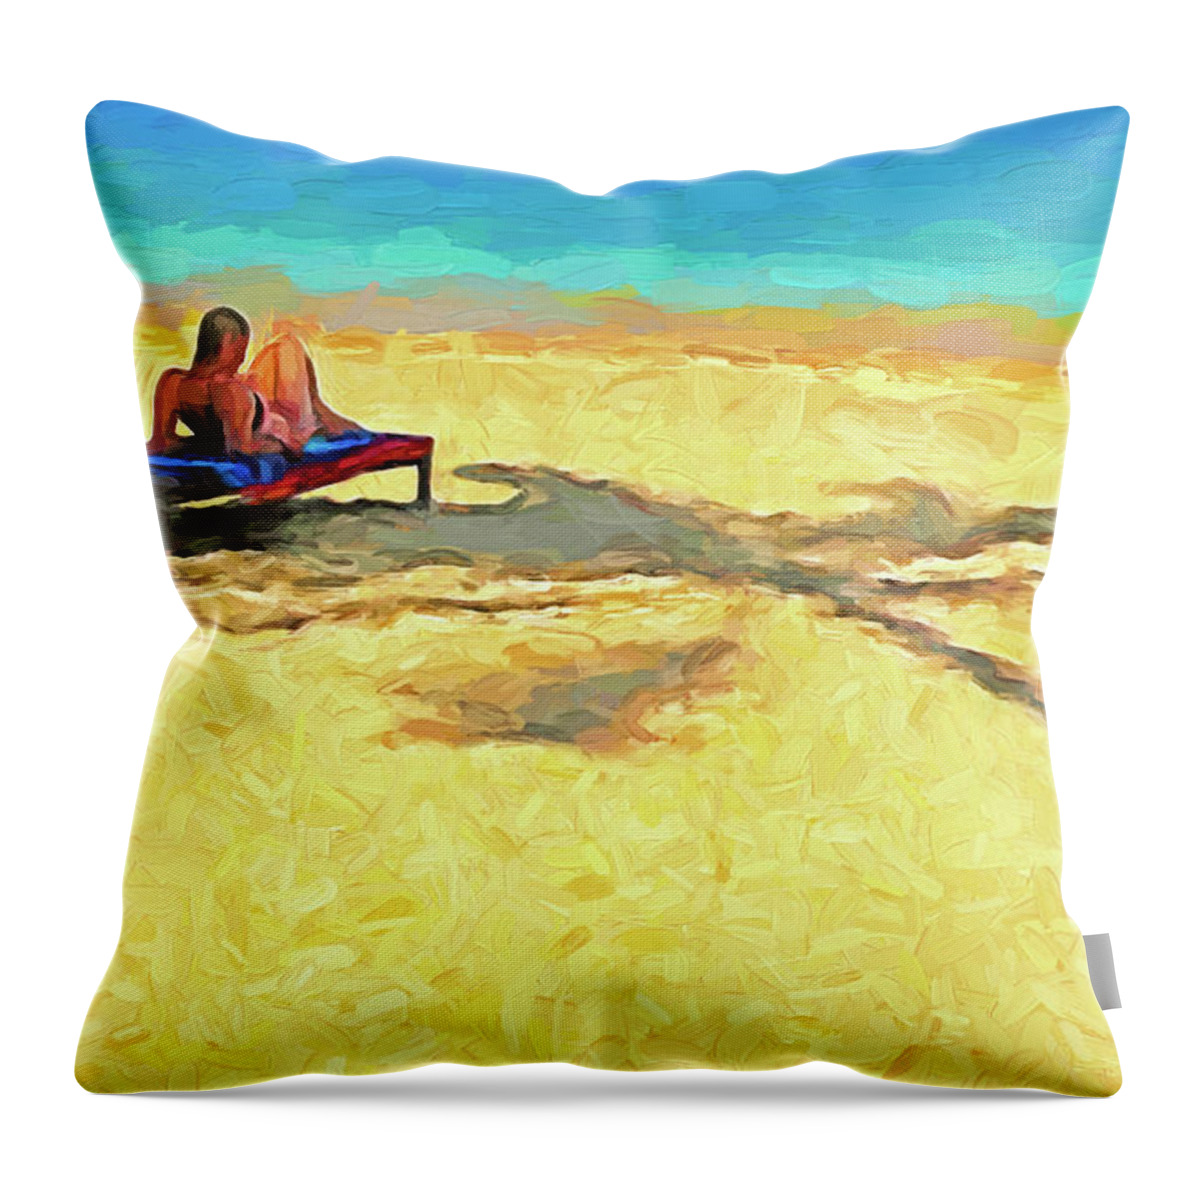 Gulf Of Thailand Throw Pillow featuring the photograph Thai Beach Sunbather by Dennis Cox